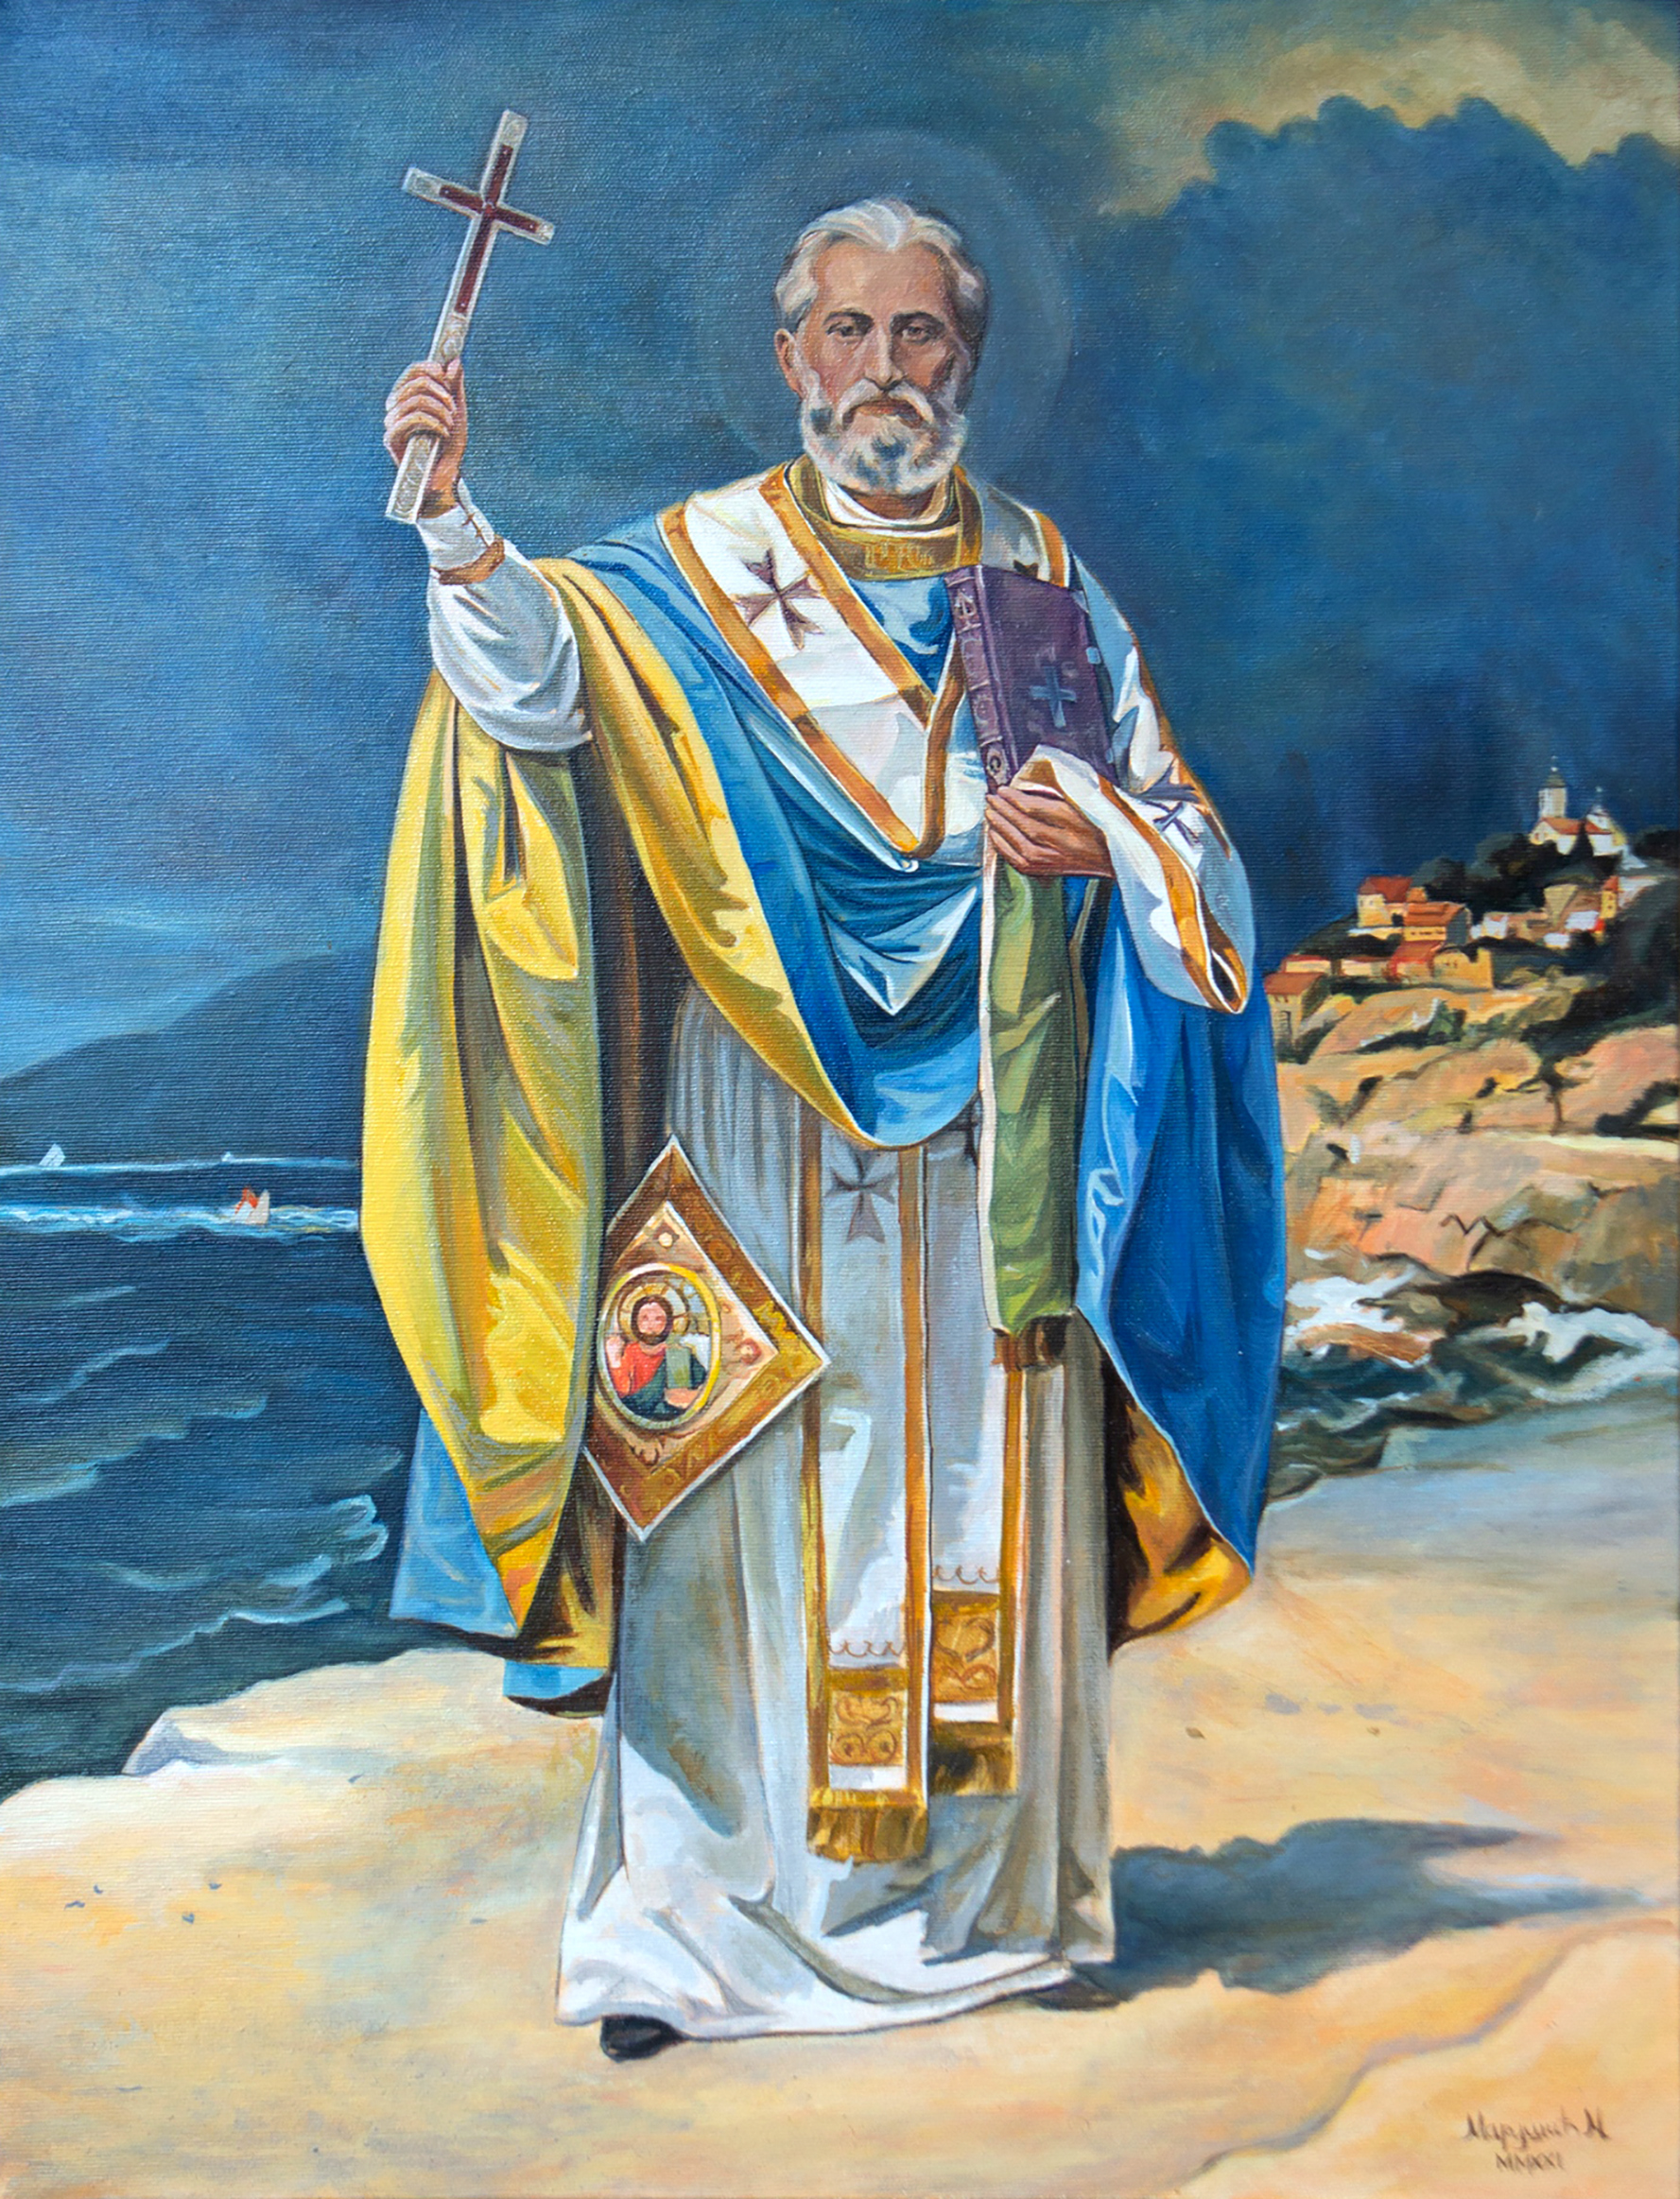 Saint Nicholas - 65x50cm - Religious painting - Oil on canvas artwork hand painted by artist Milica MARUŠIĆ